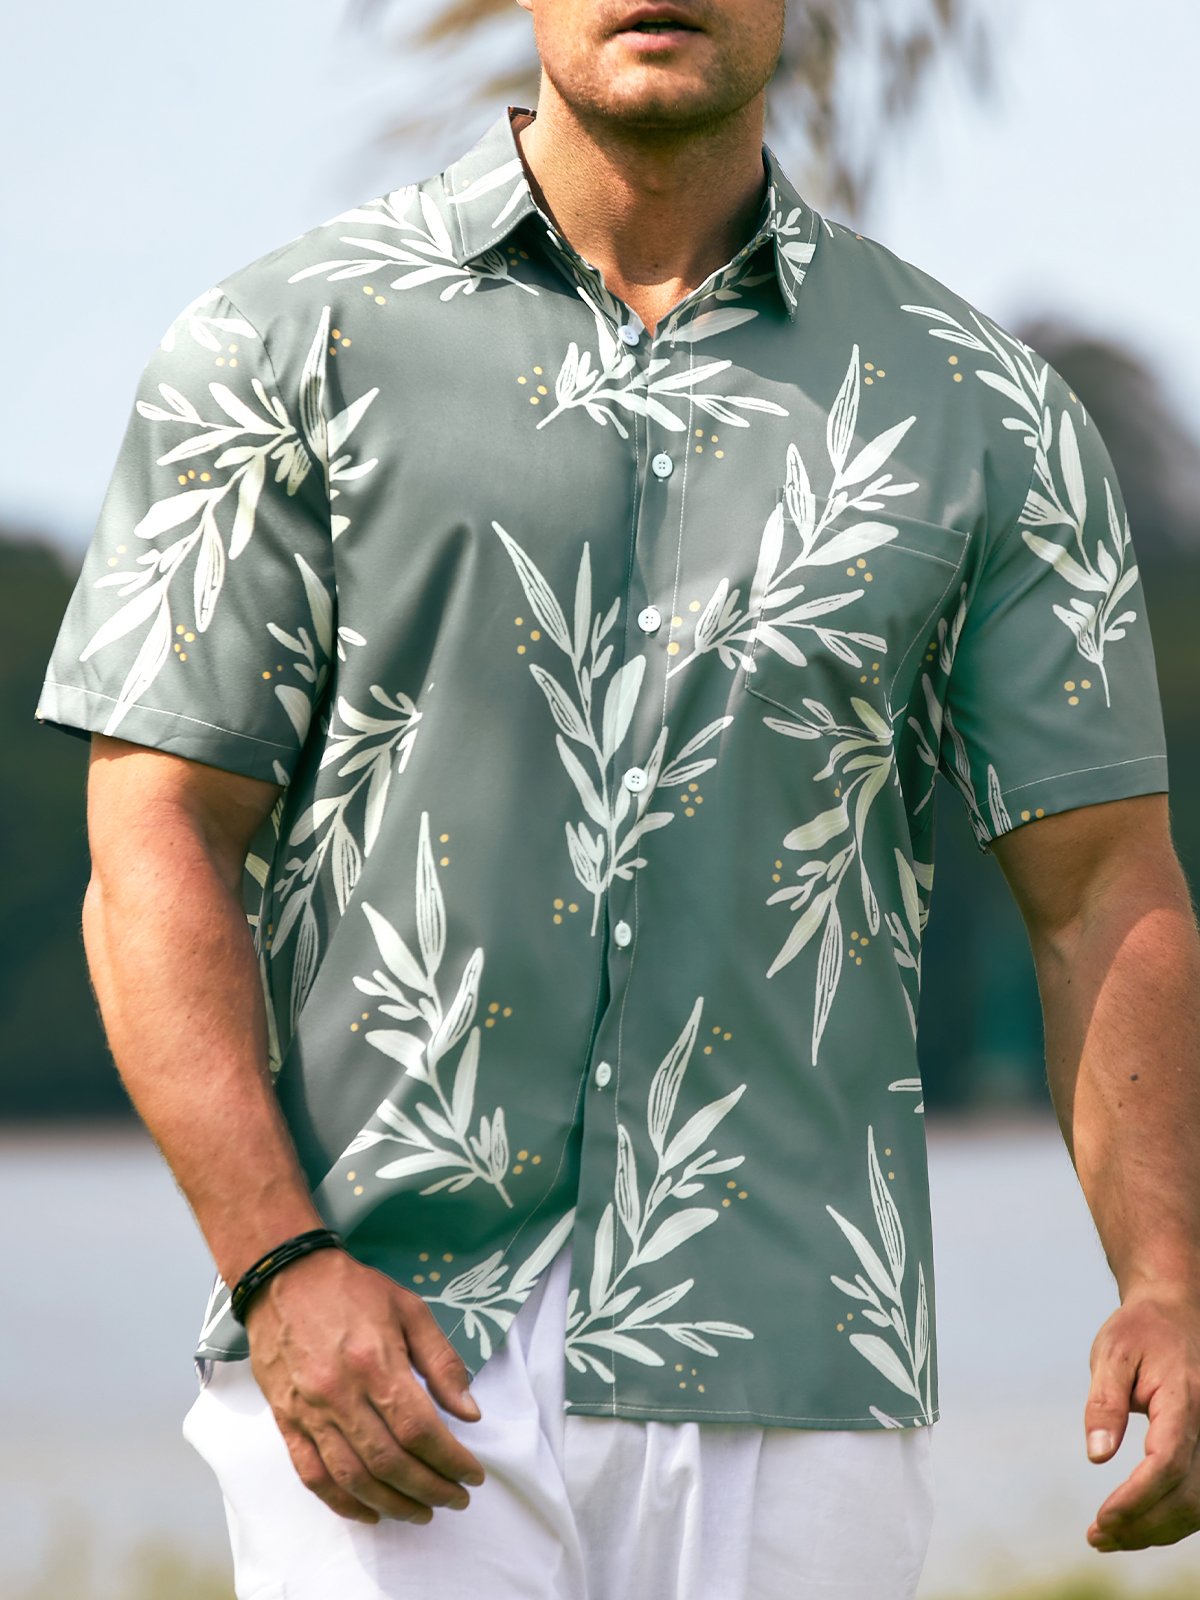 Hardaddy Men's Vintage Print Casual Breathable Short Sleeve Hawaiian Shirt